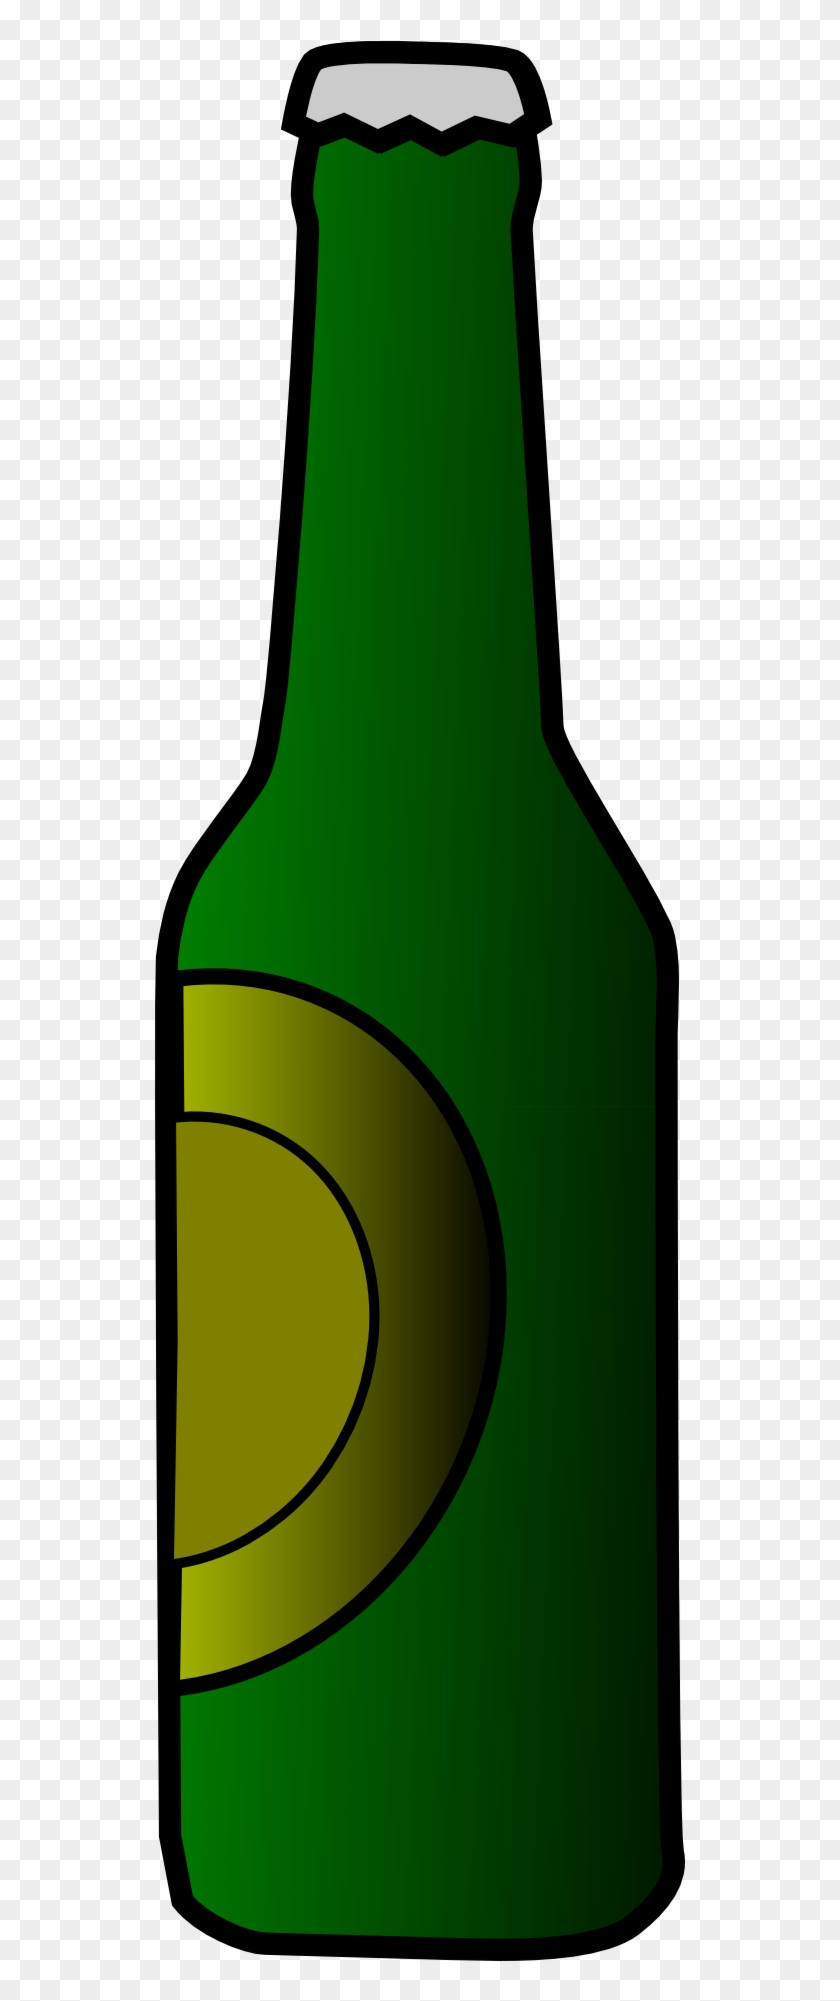 Beer Bottle Clip Art - Beer Bottle Clip Art #309980